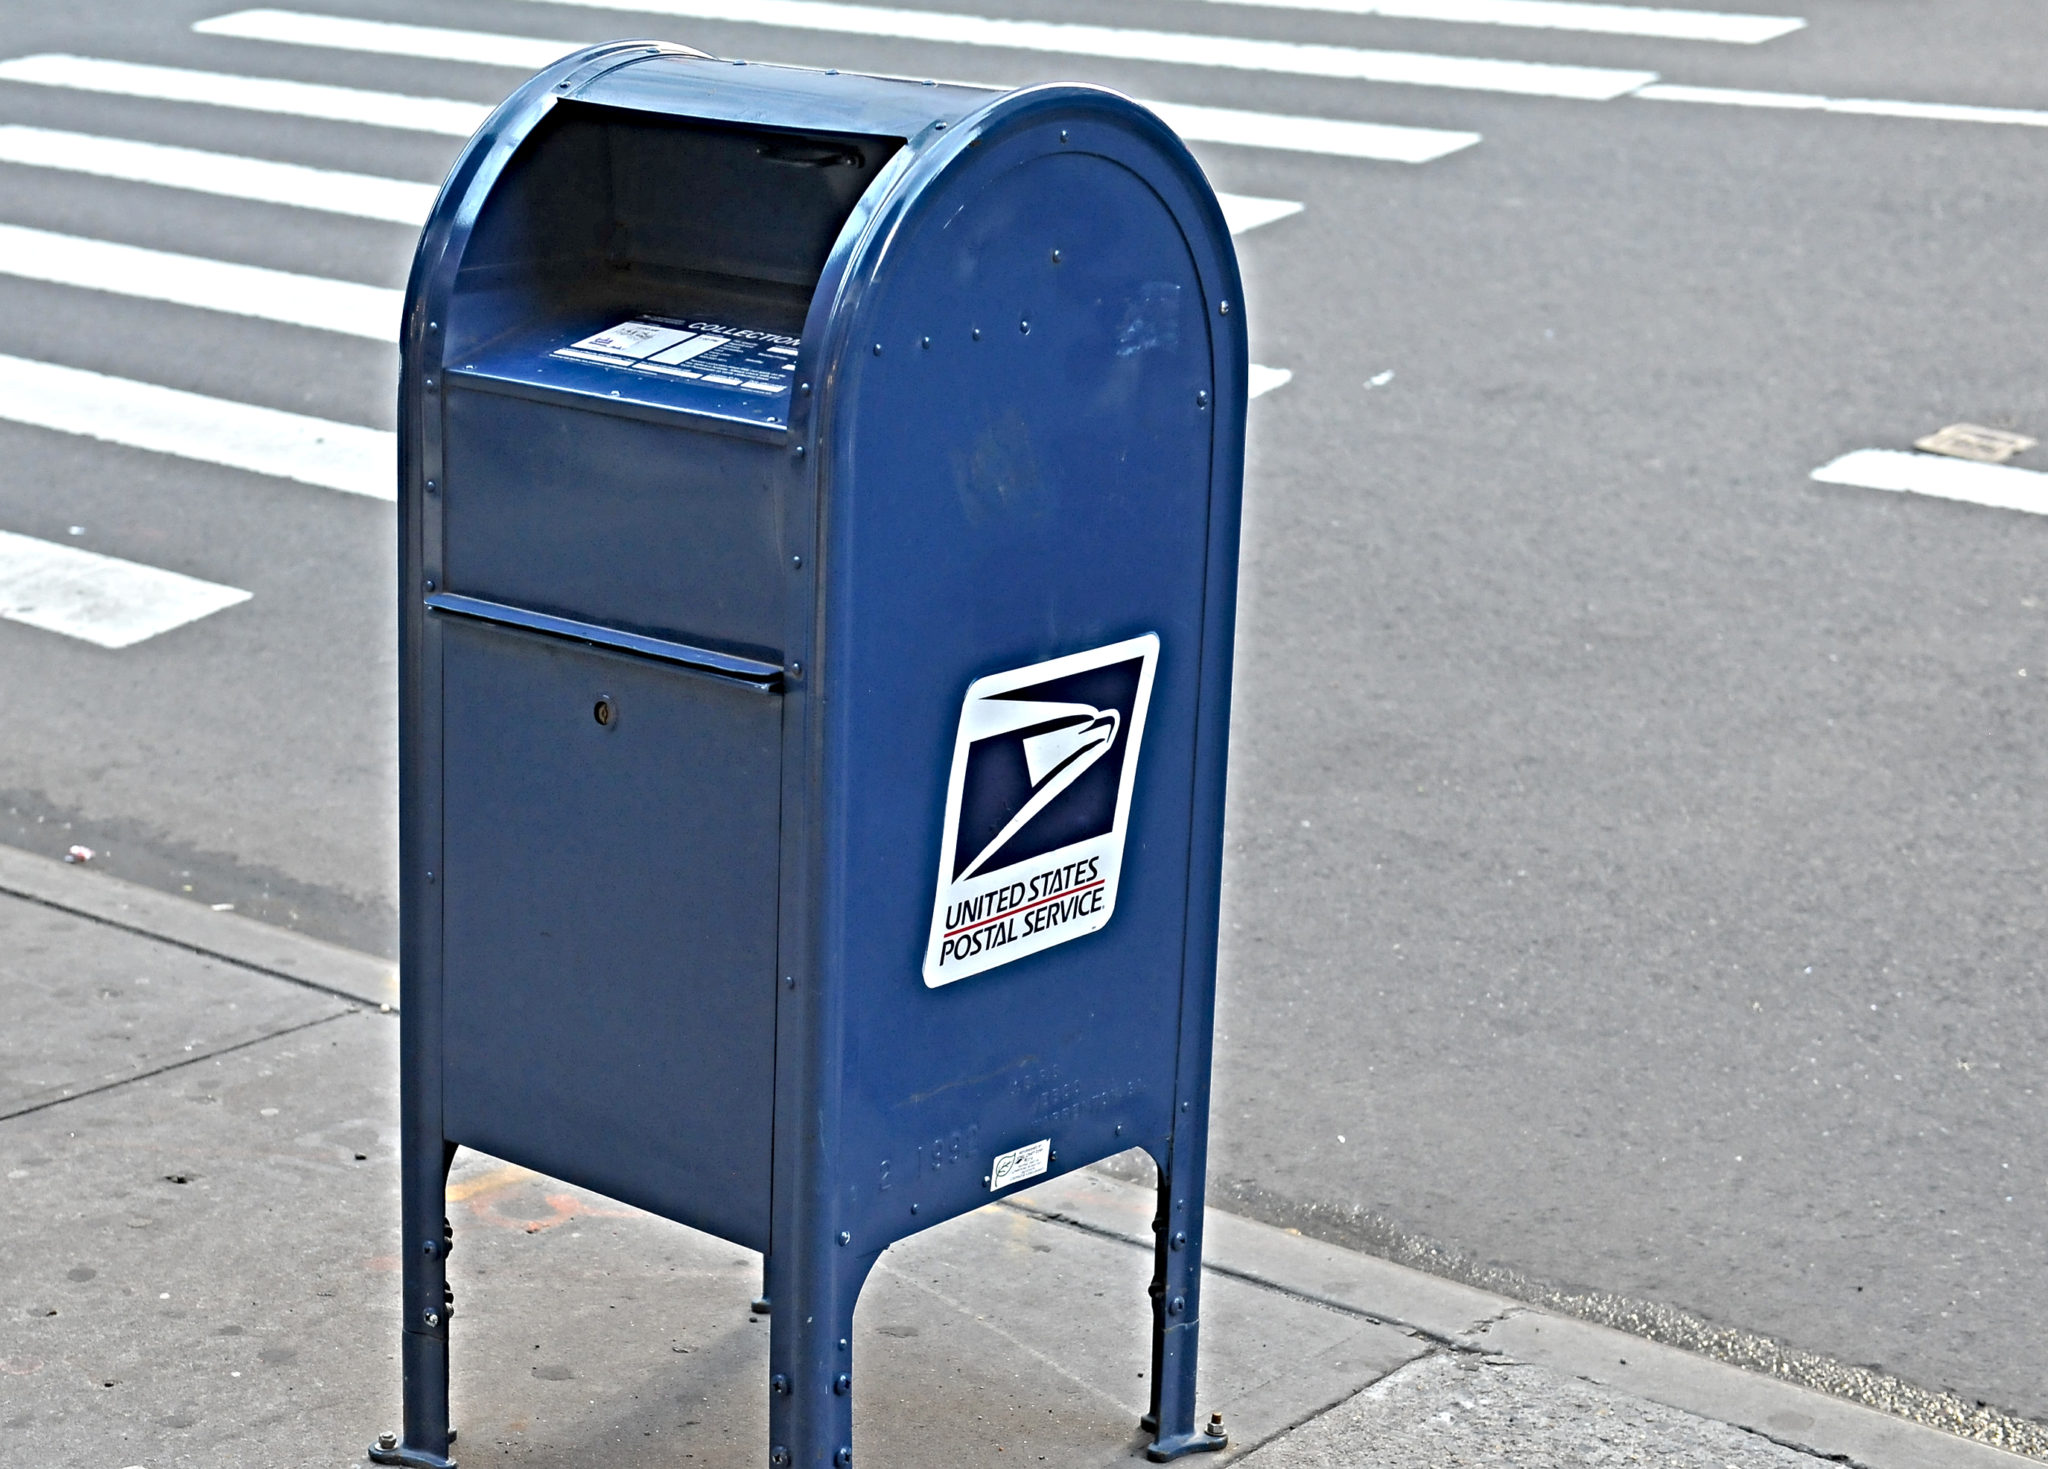 usps cluster mailbox master key